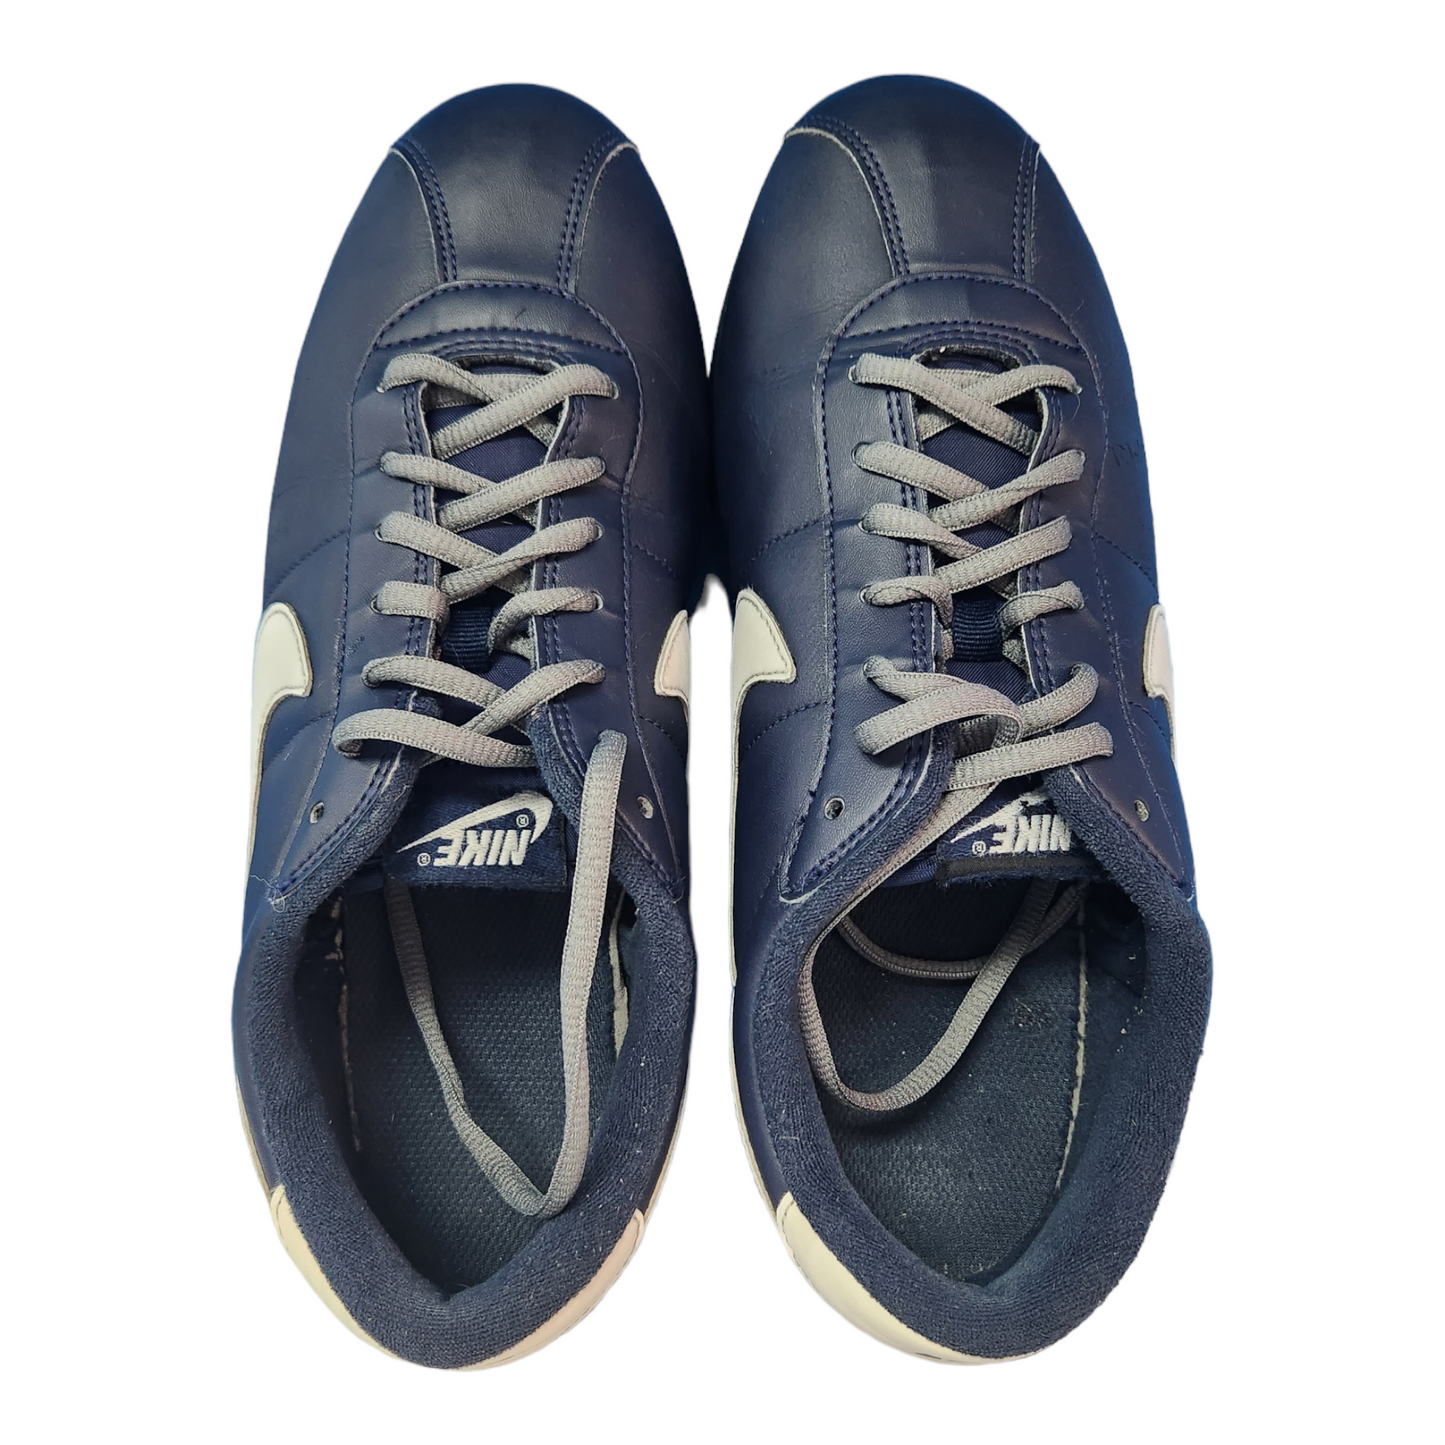 Nike Cortez '06 Leather Men's Shoes Obsidian Blue/White - Size 9